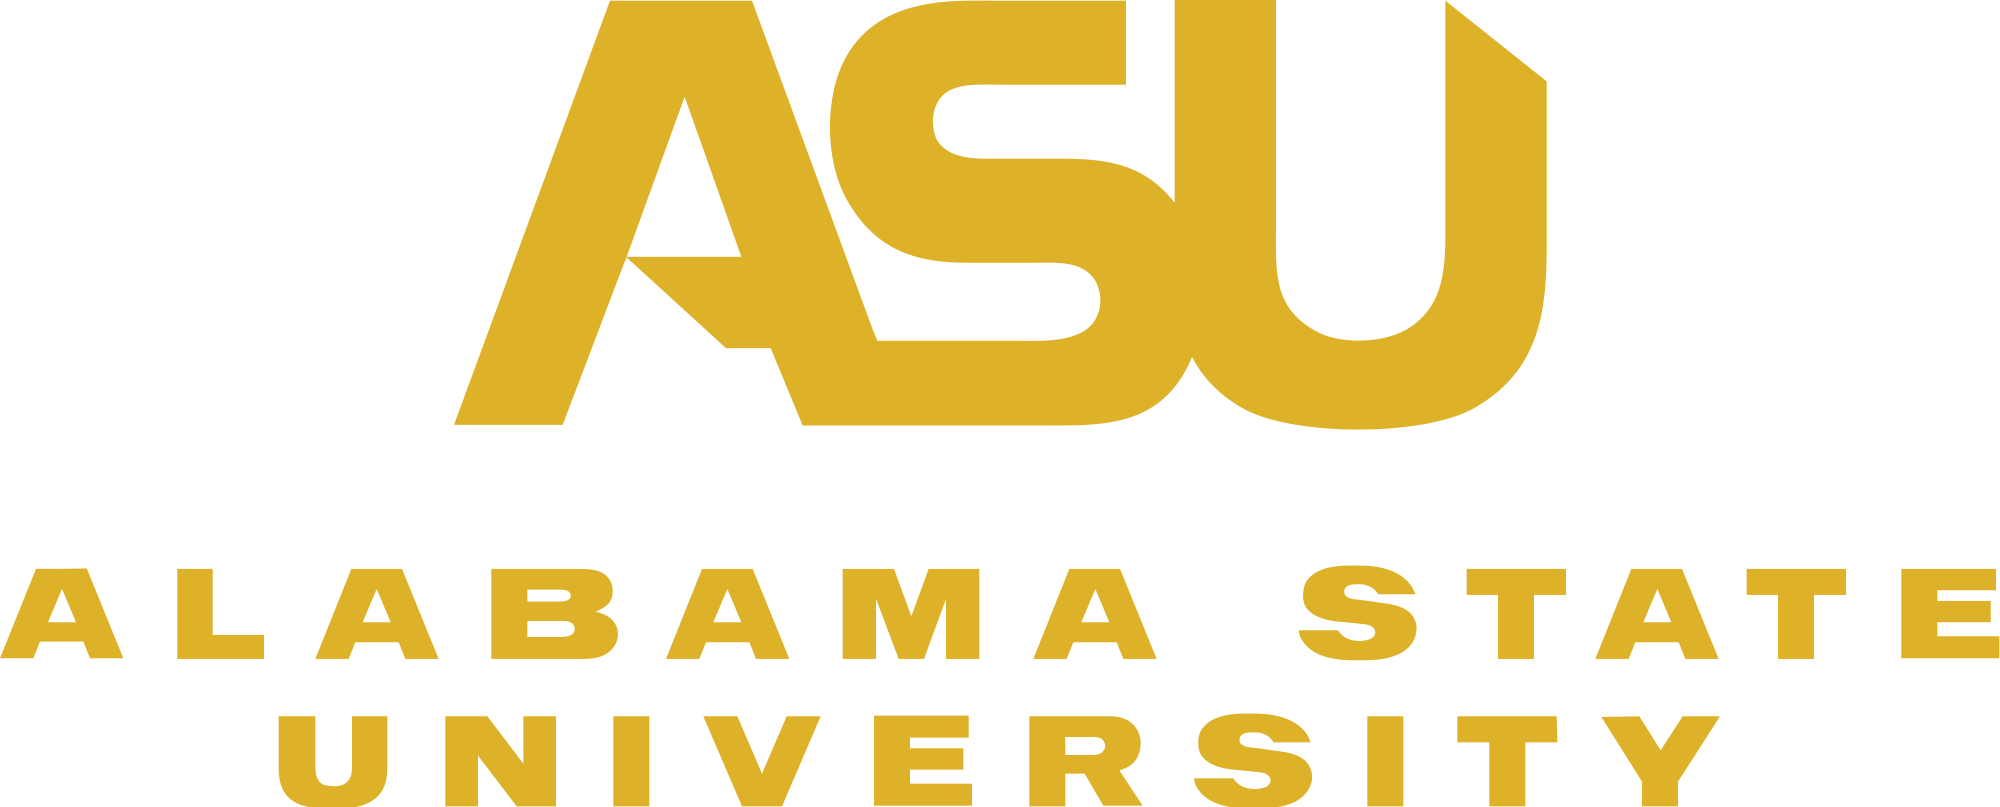 Alabama State Logo - Alabama State University wordmark.svg